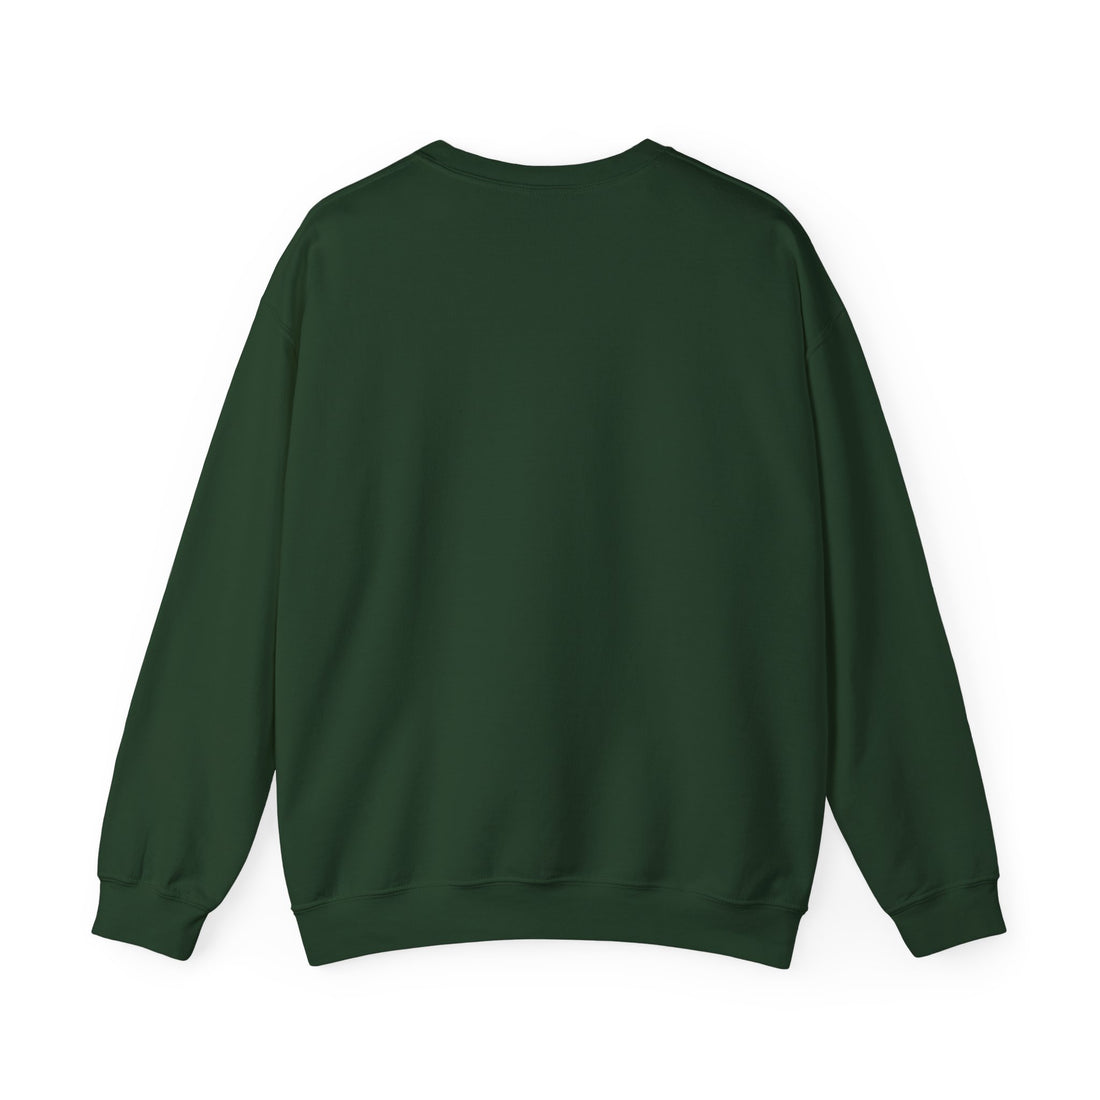 Pakistan x Streetwear Series - Crewneck Sweatshirt